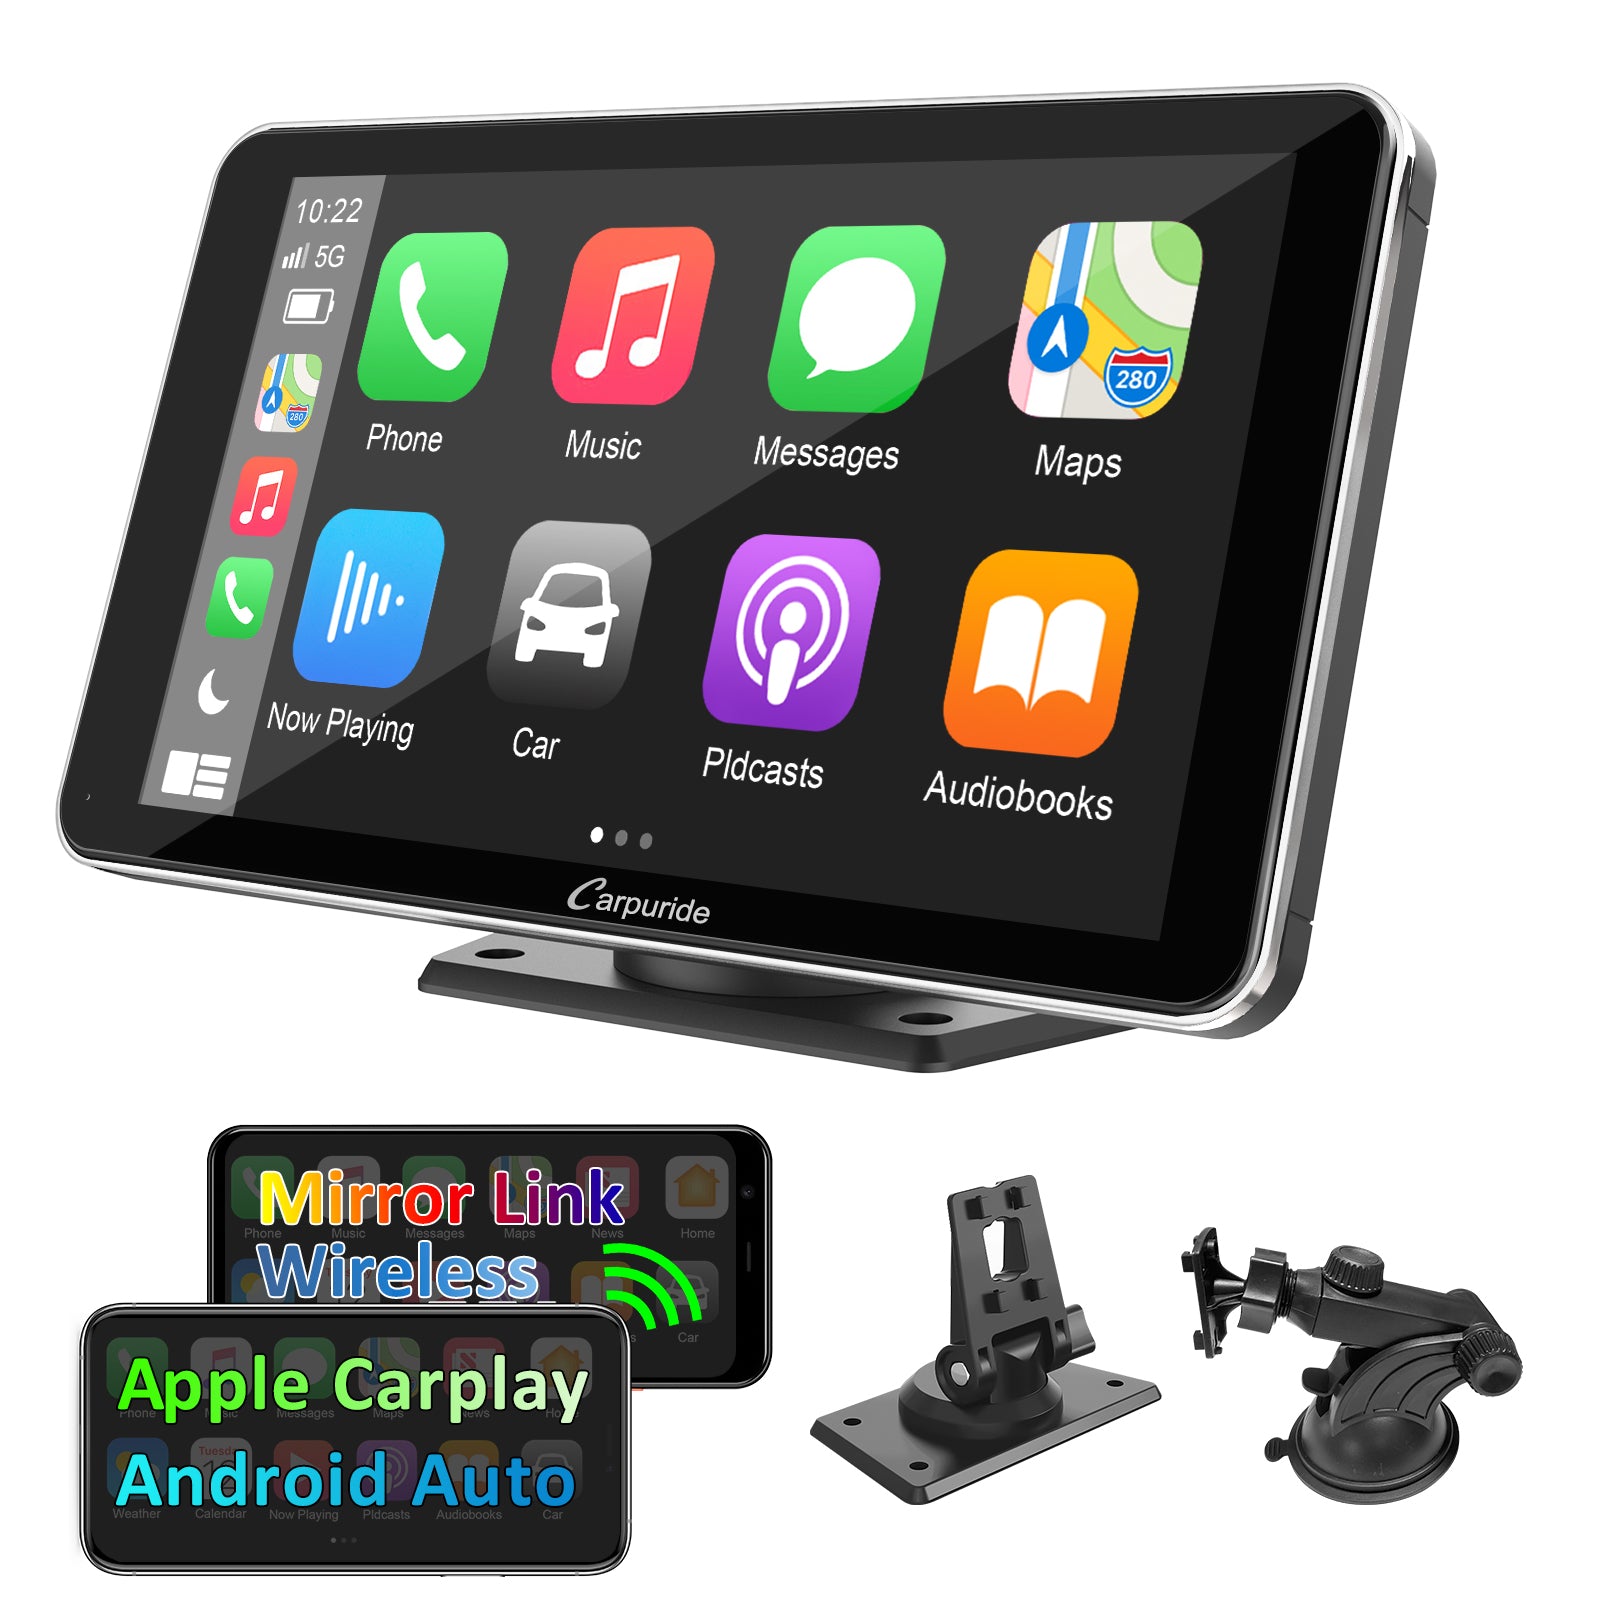 Carpuride W702 Wireless Android Auto/ Apple Carplay for Motorcycles! 